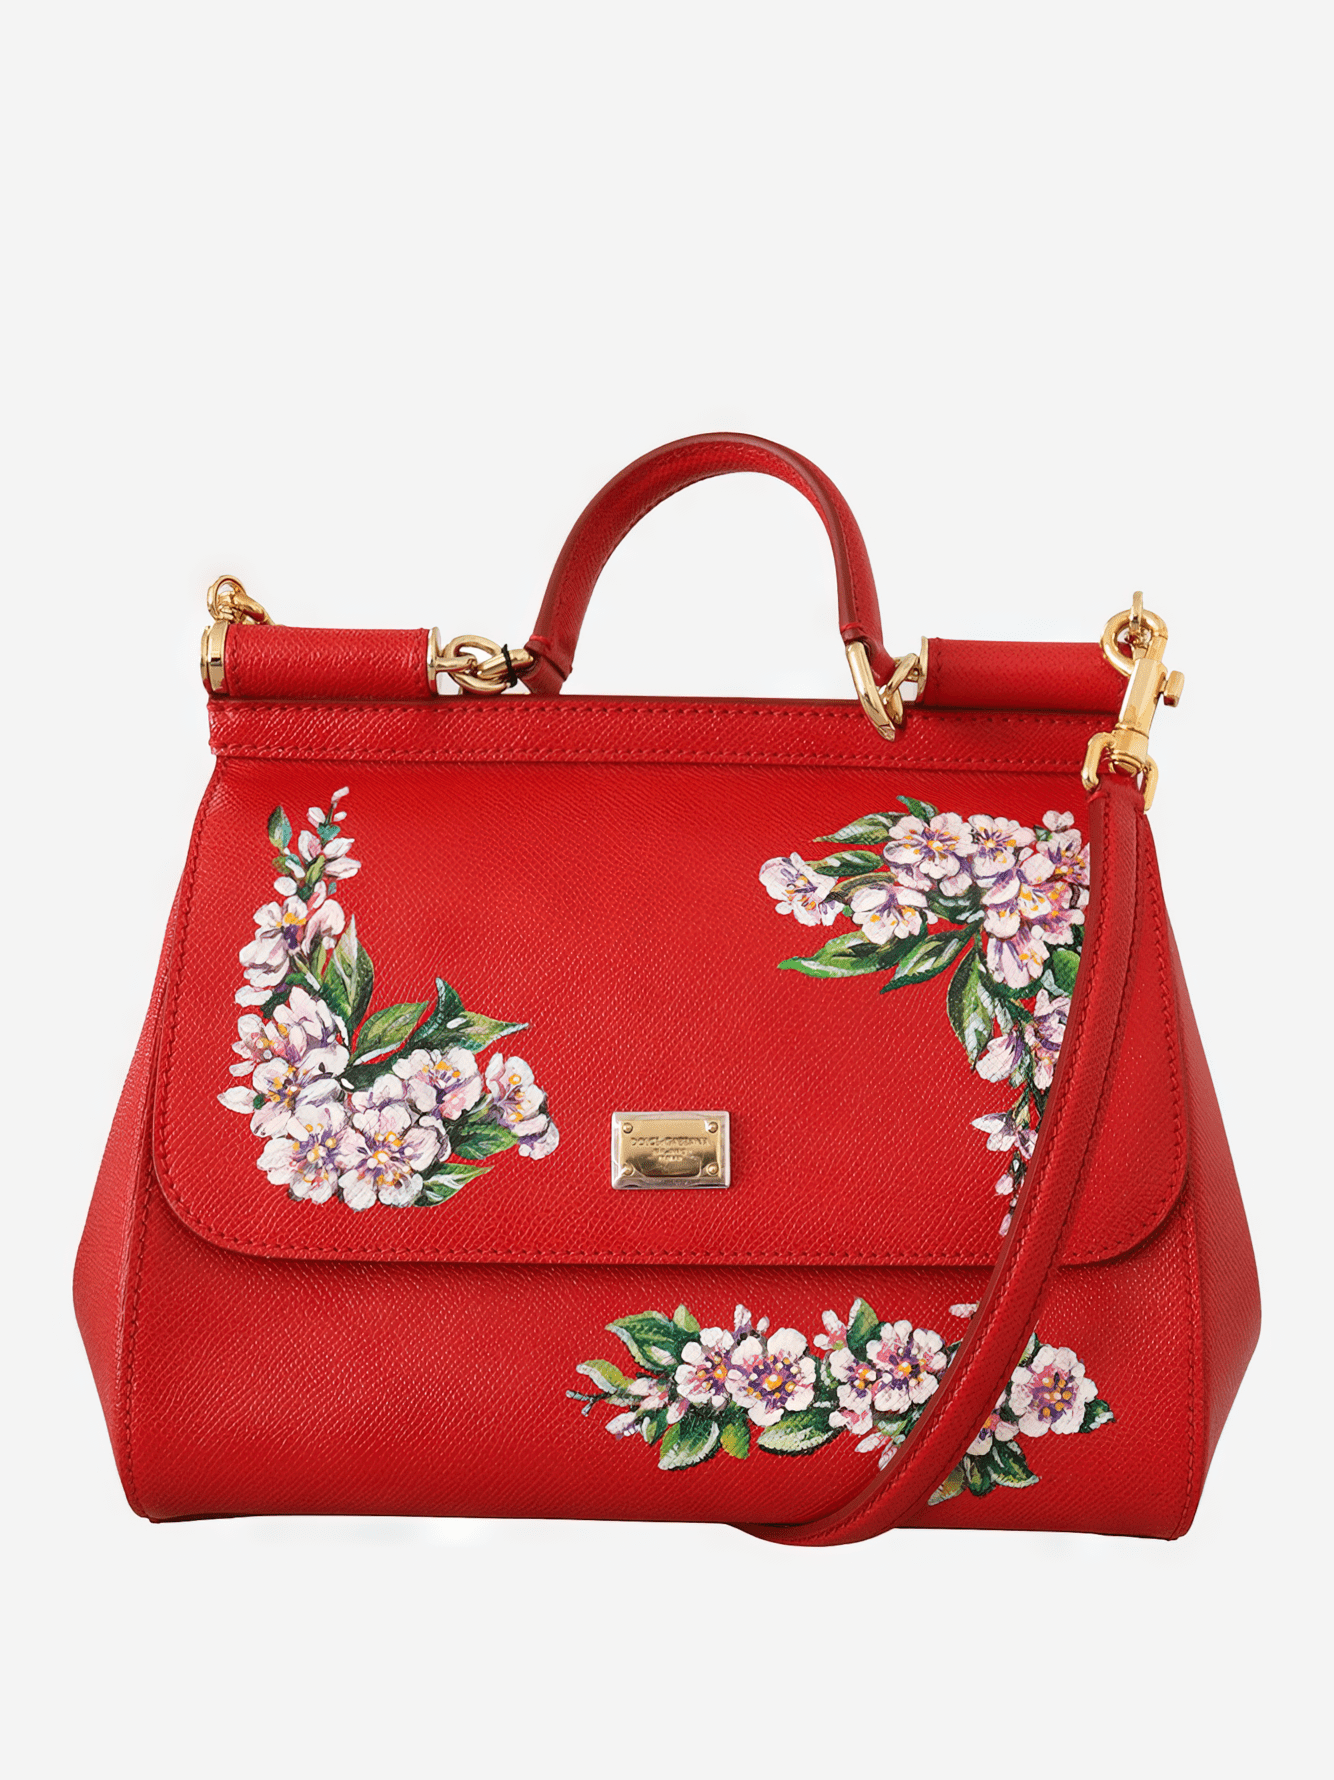 Dolce & Gabbana Sicily Floral Print Bag